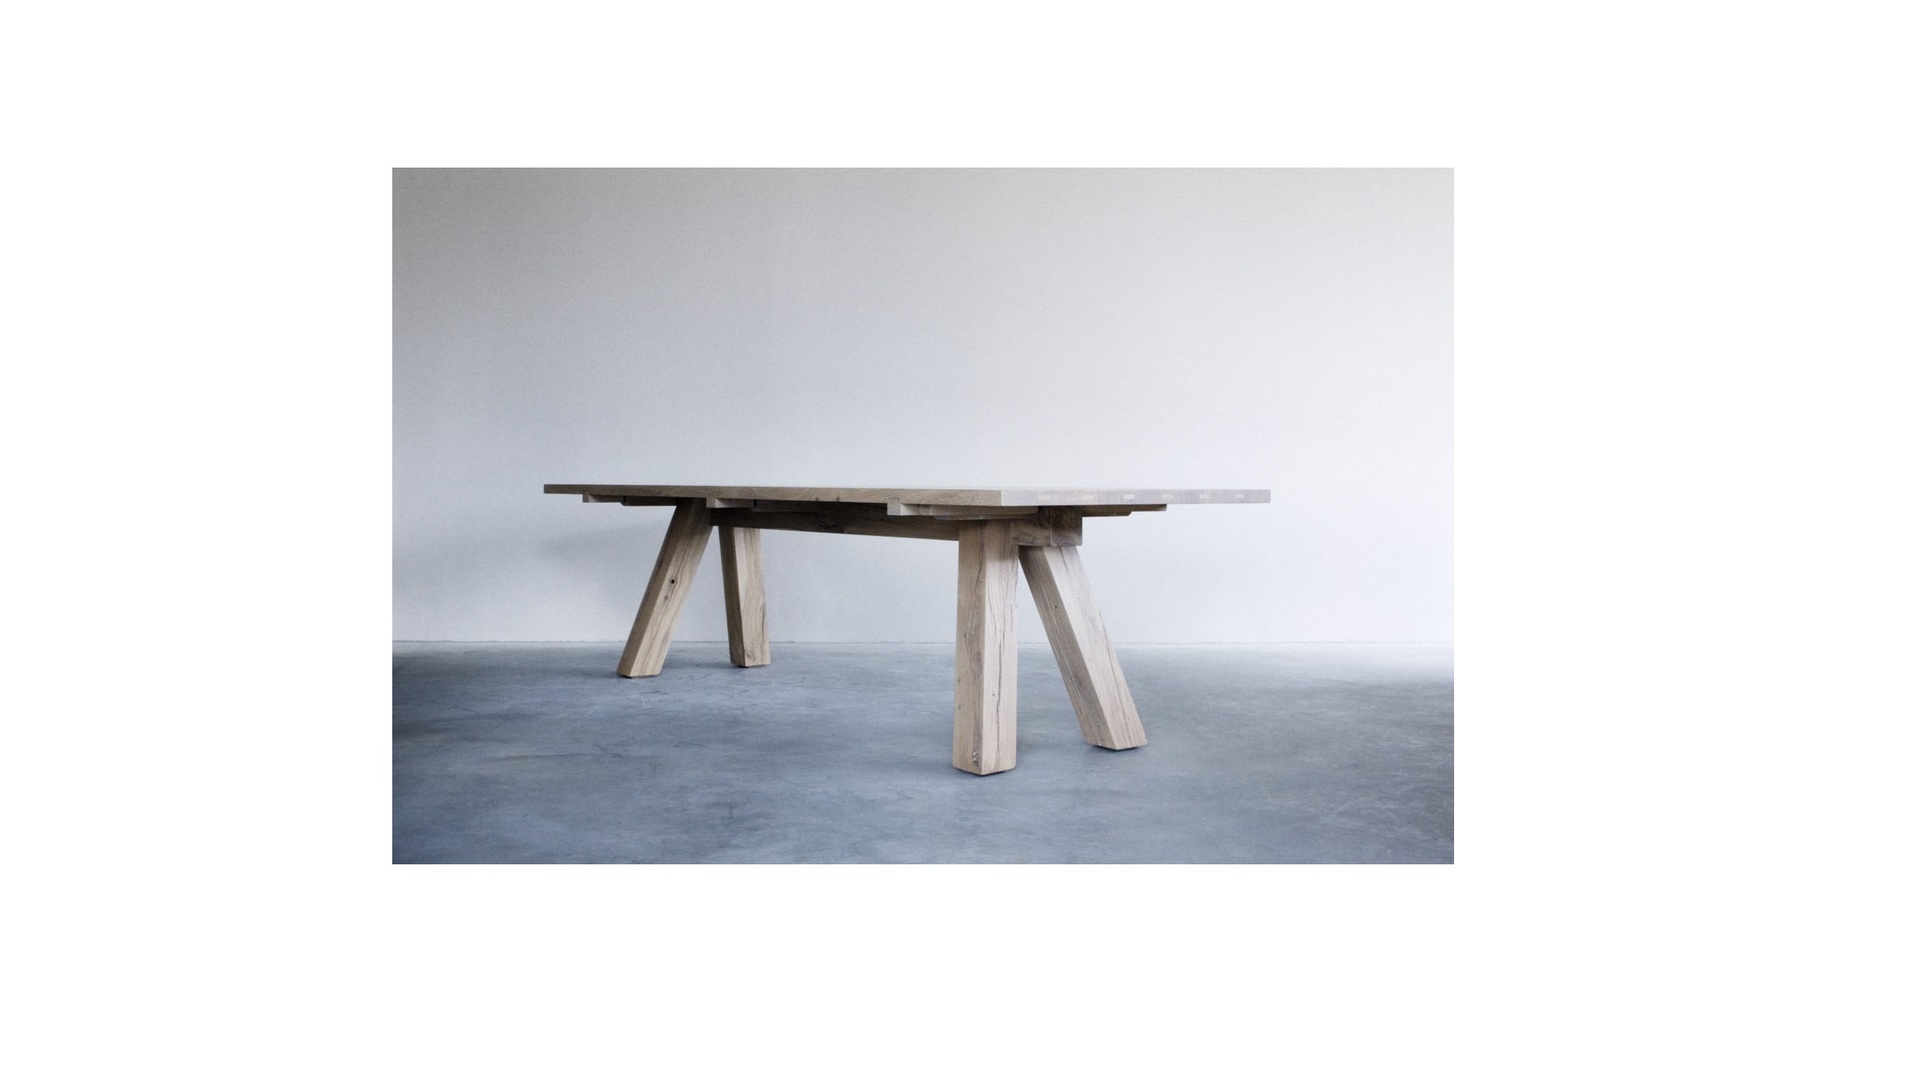 Lens-dining-table-tafel-Tisch-21-1280x840 klein.jpg